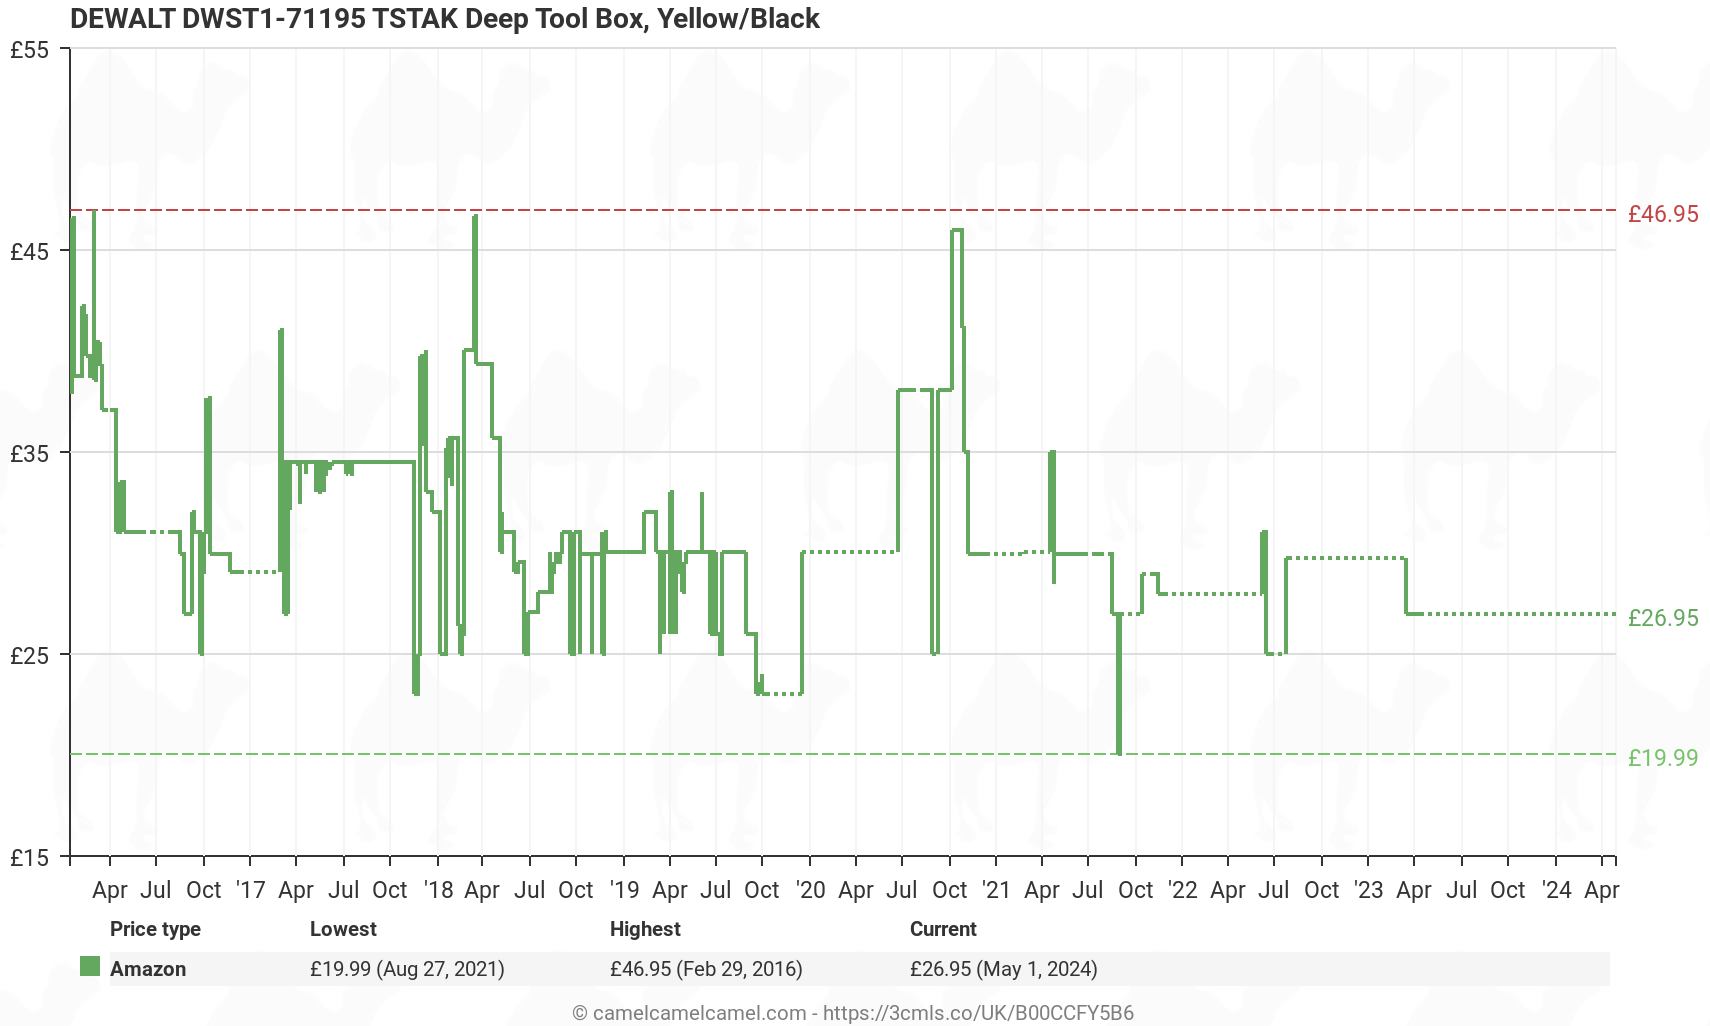 DEWALT DWST1-71195 TSTAK Deep Tool Box, Yellow/Black - Price History: B00CCFY5B6